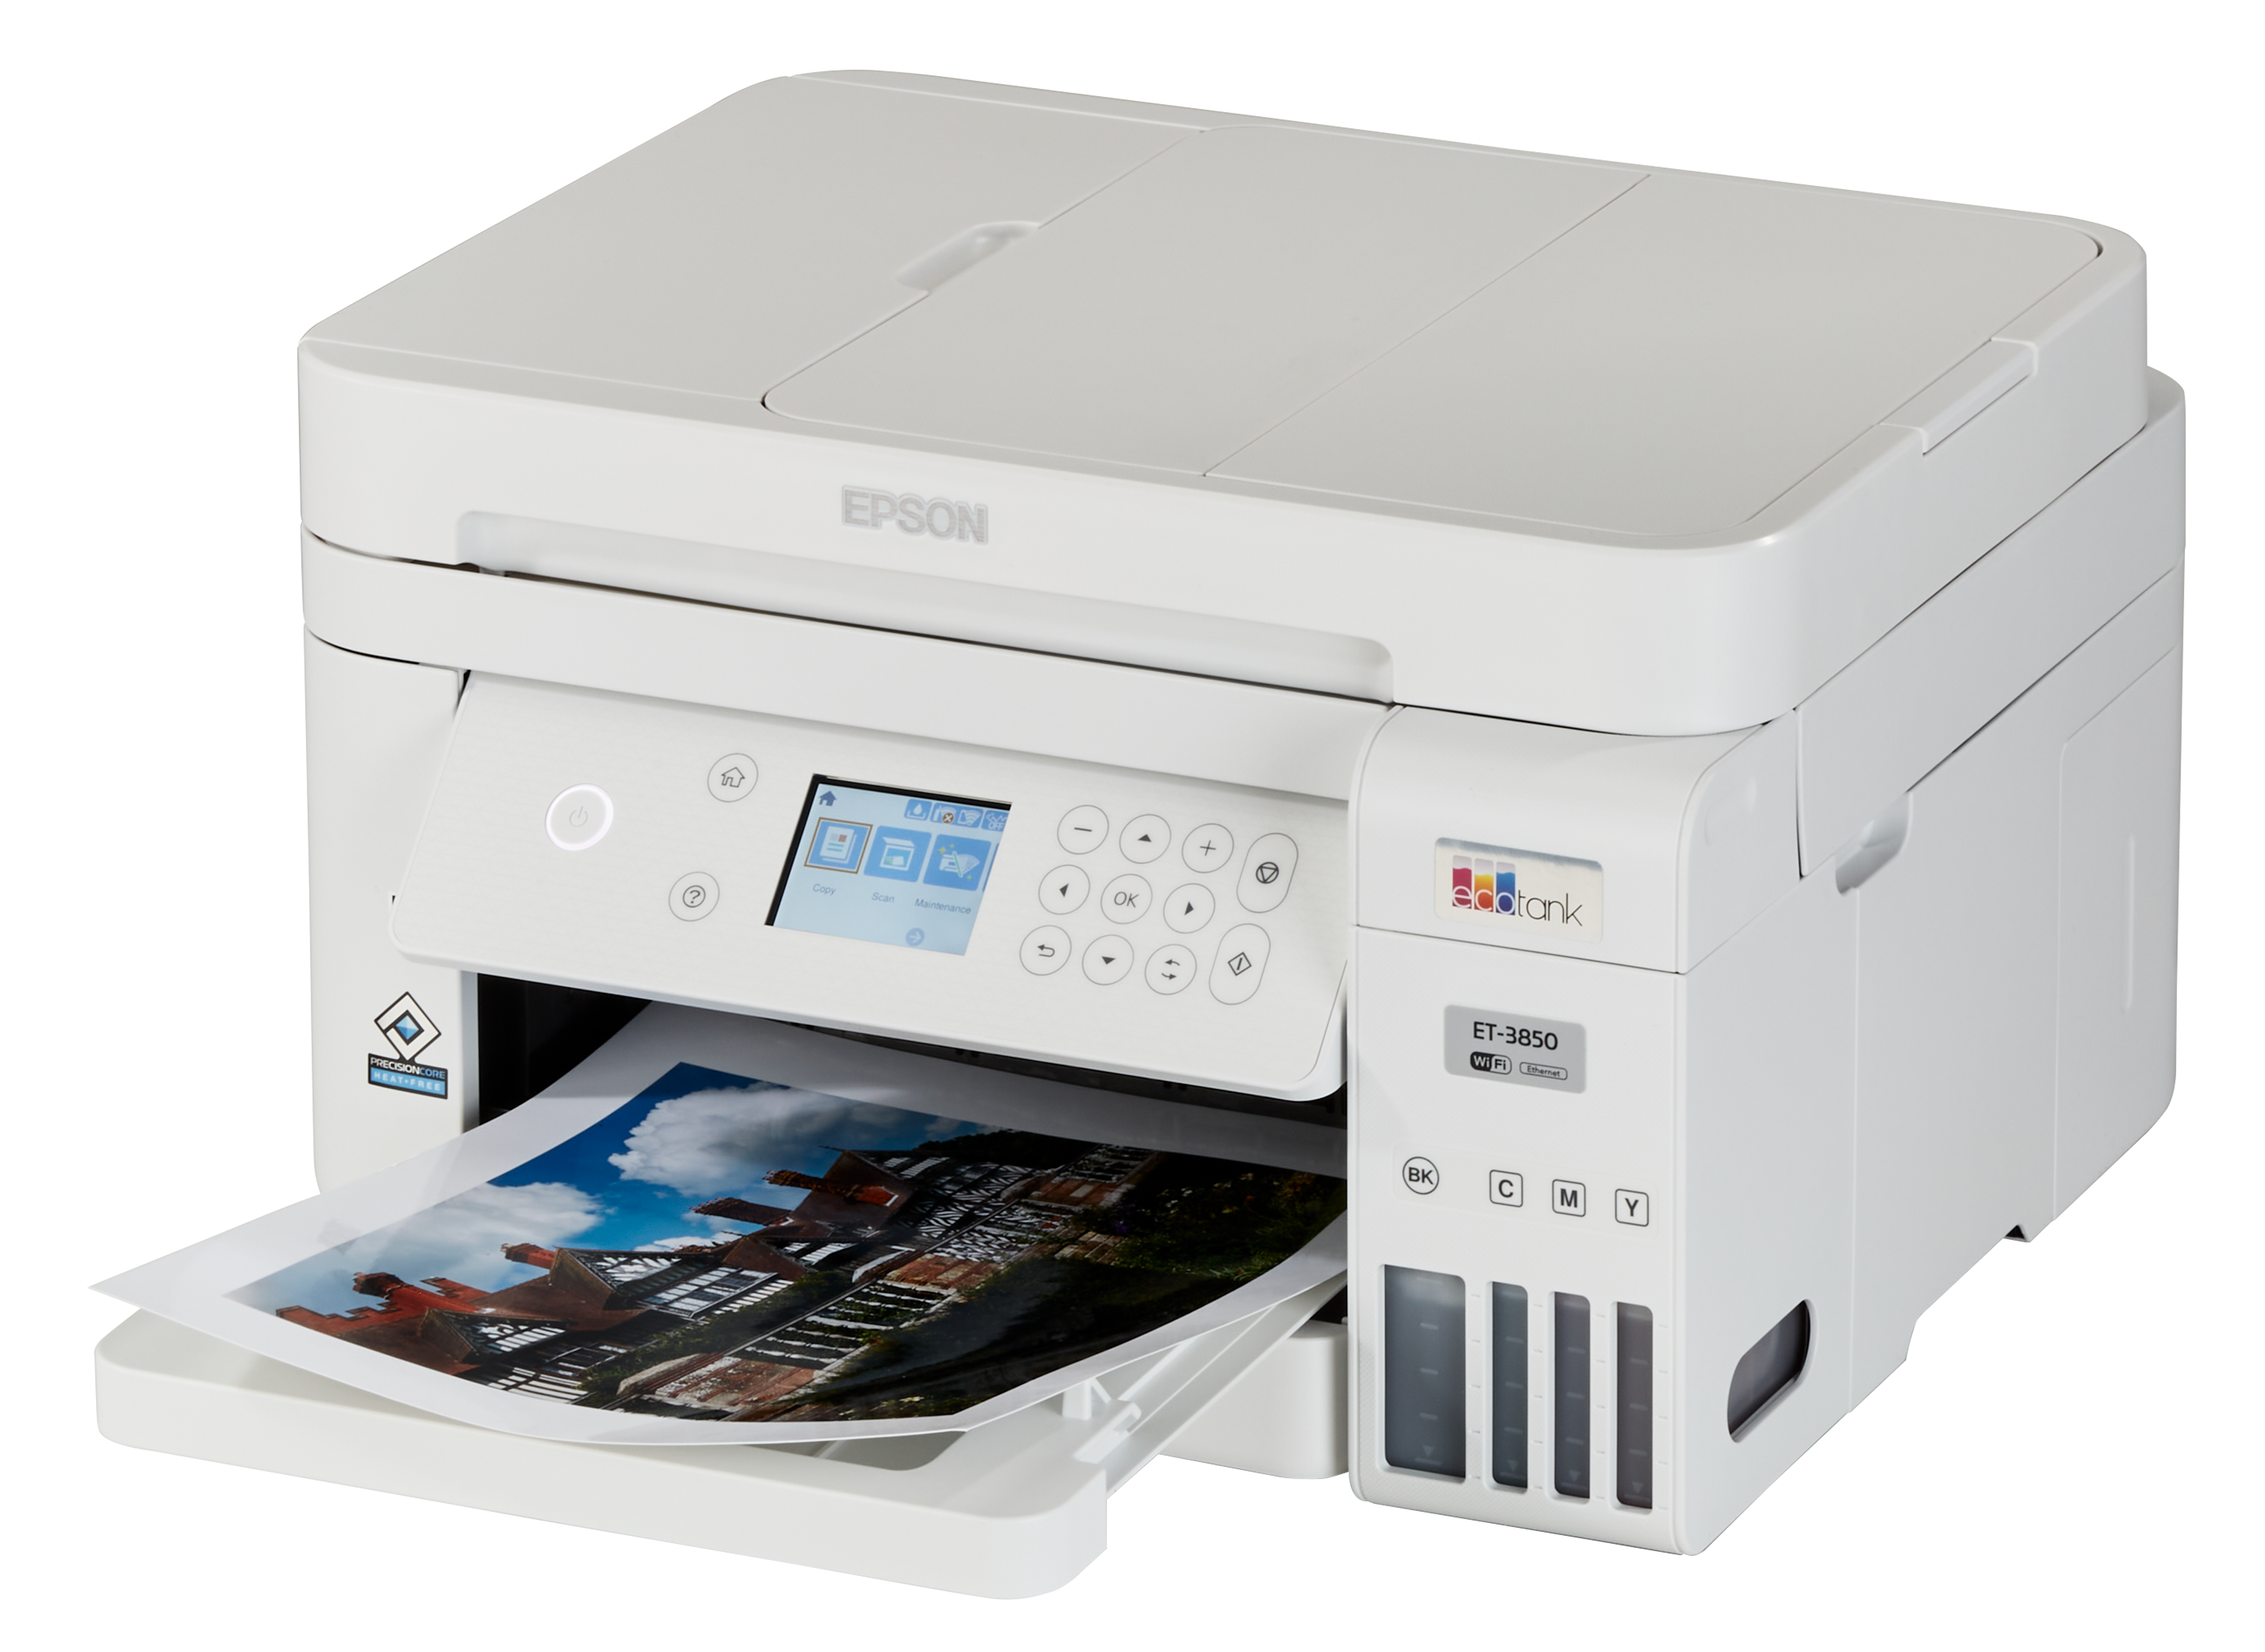 Epson EcoTank ET-3850 Printer Power Cord